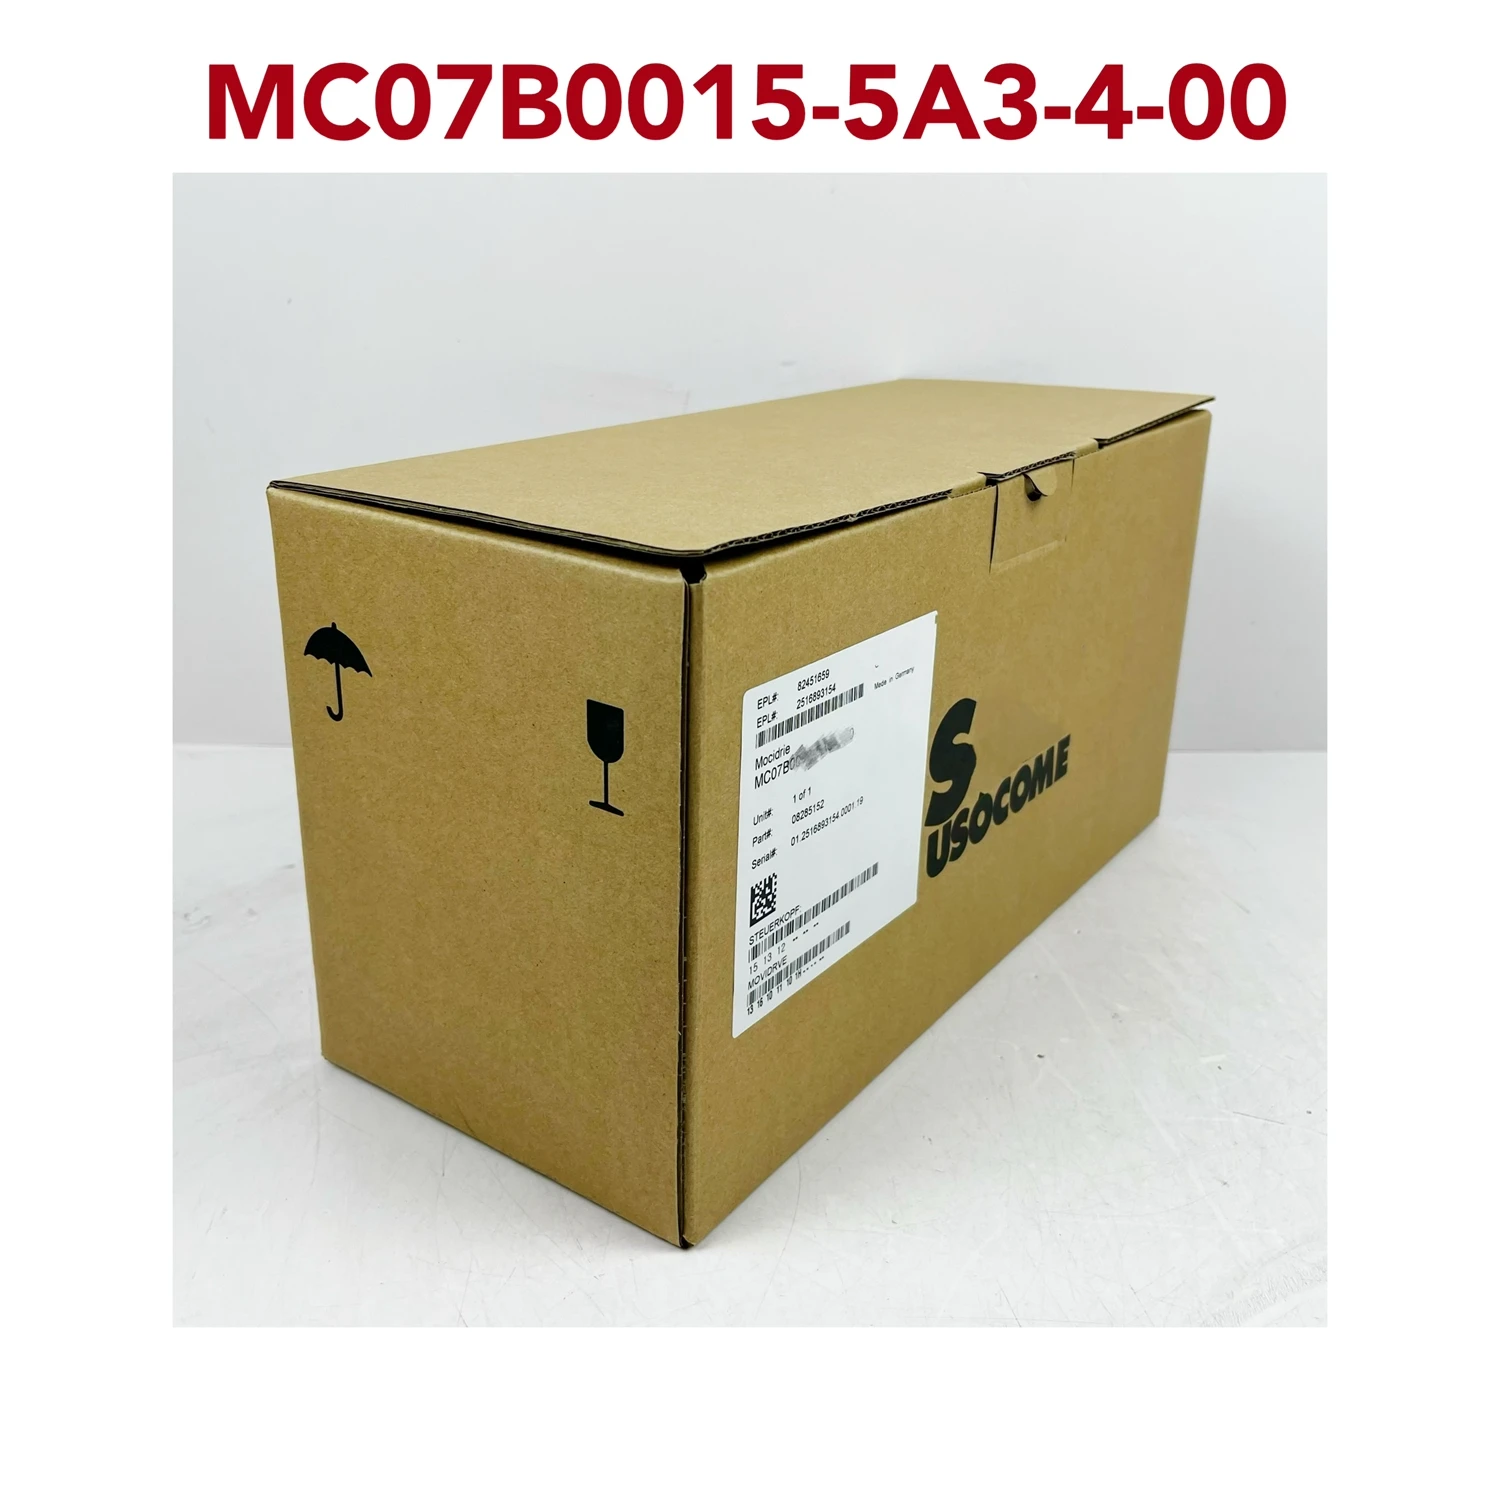 

NEW MC07B0015-5A3-4-00 in box fast ship